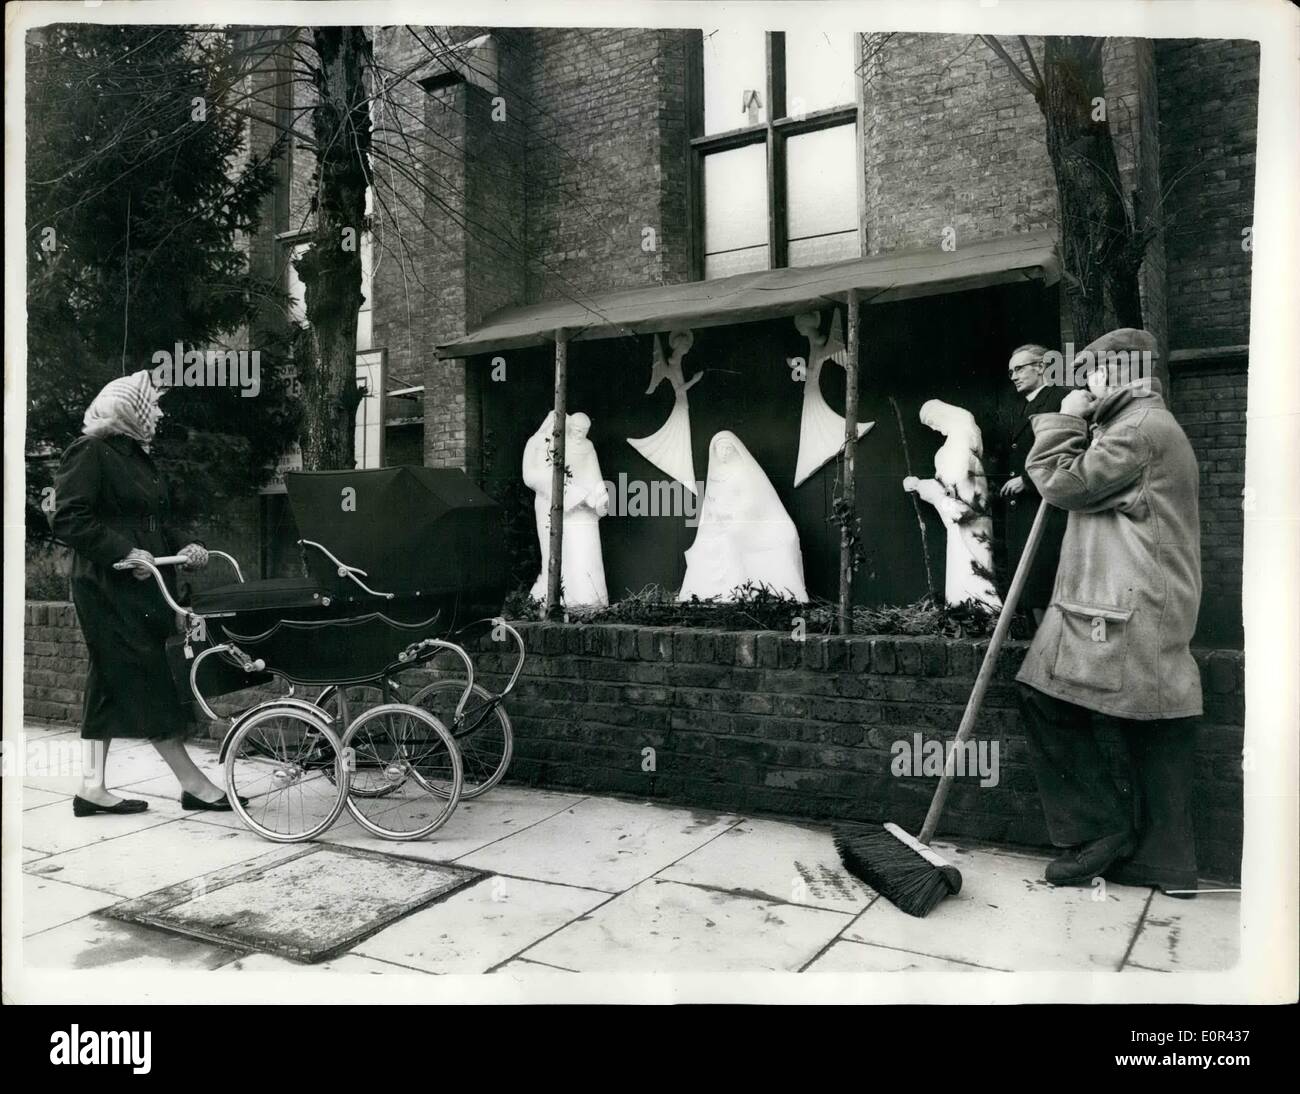 Jan. 09, 1958 - 9-1-58 Admiration for the VicarÃ¢â‚¬â„¢s work Ã¢â‚¬â€œ The striking Nativity scene outside Holy Trinity Church, Stock Photo